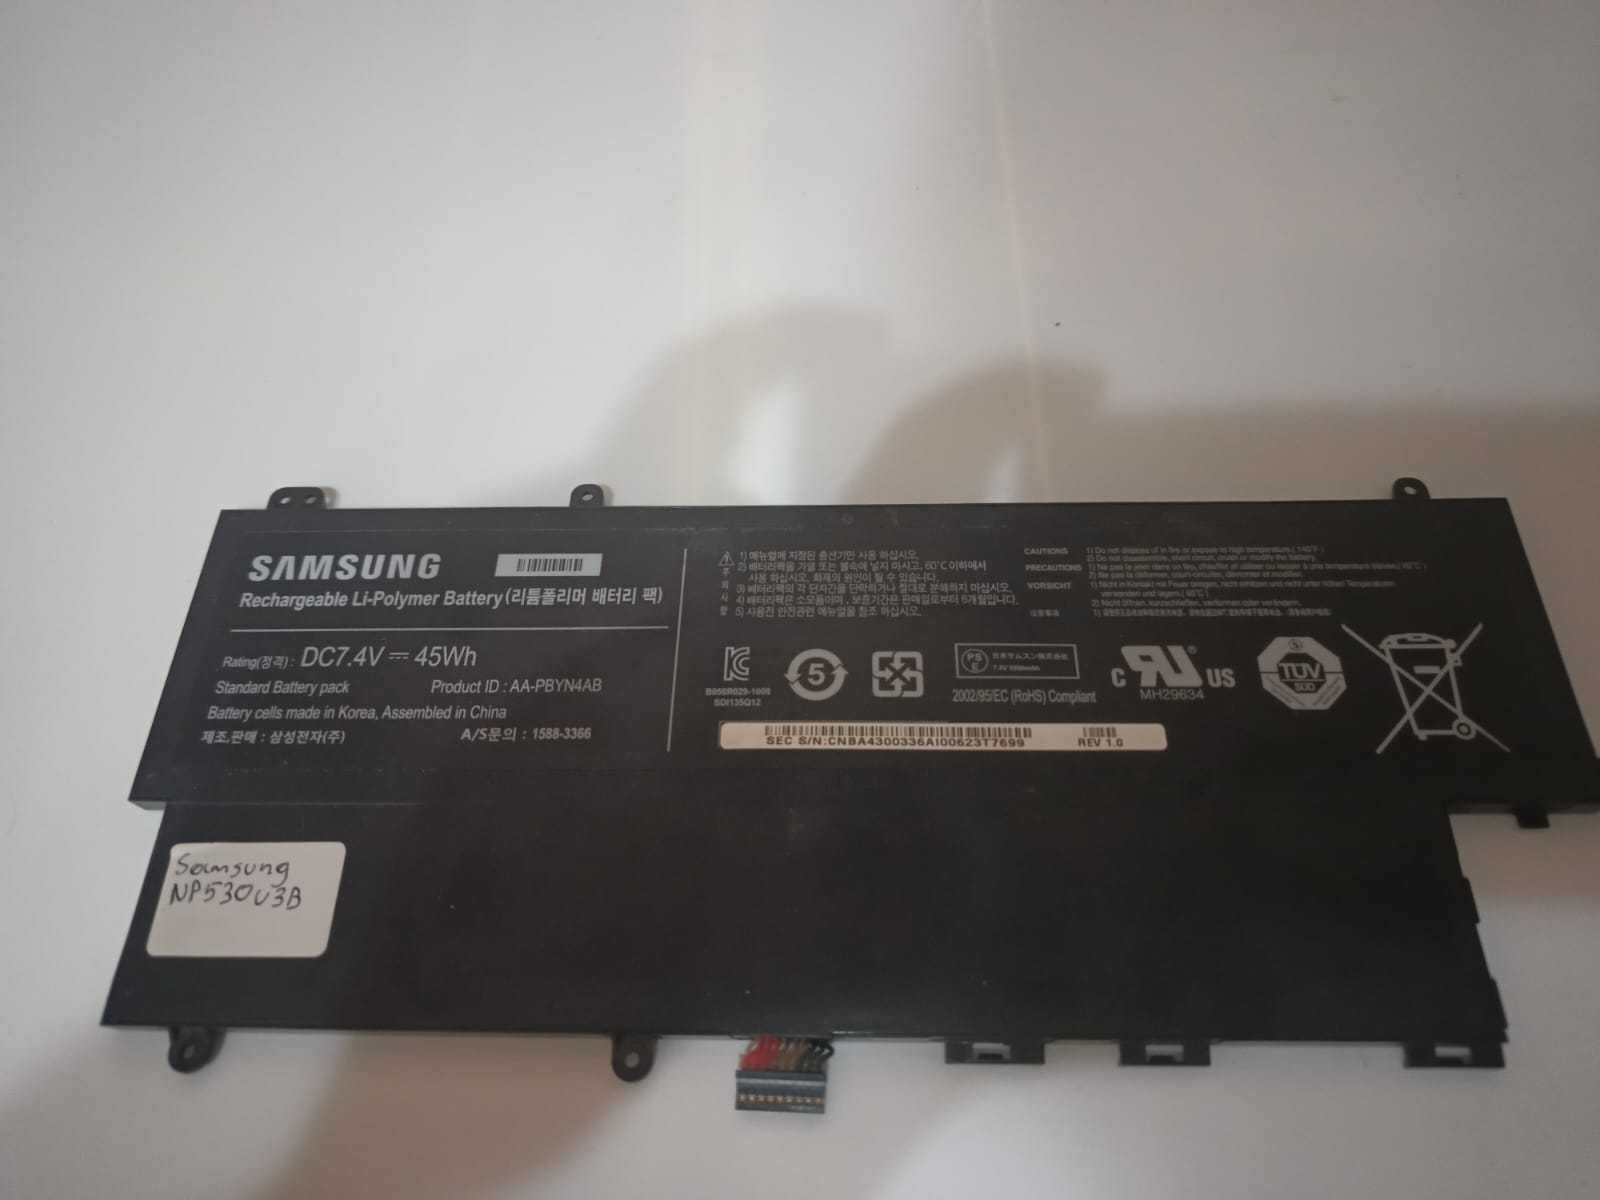 Oryginalna bateria laptopa Samsung NP530U3B.